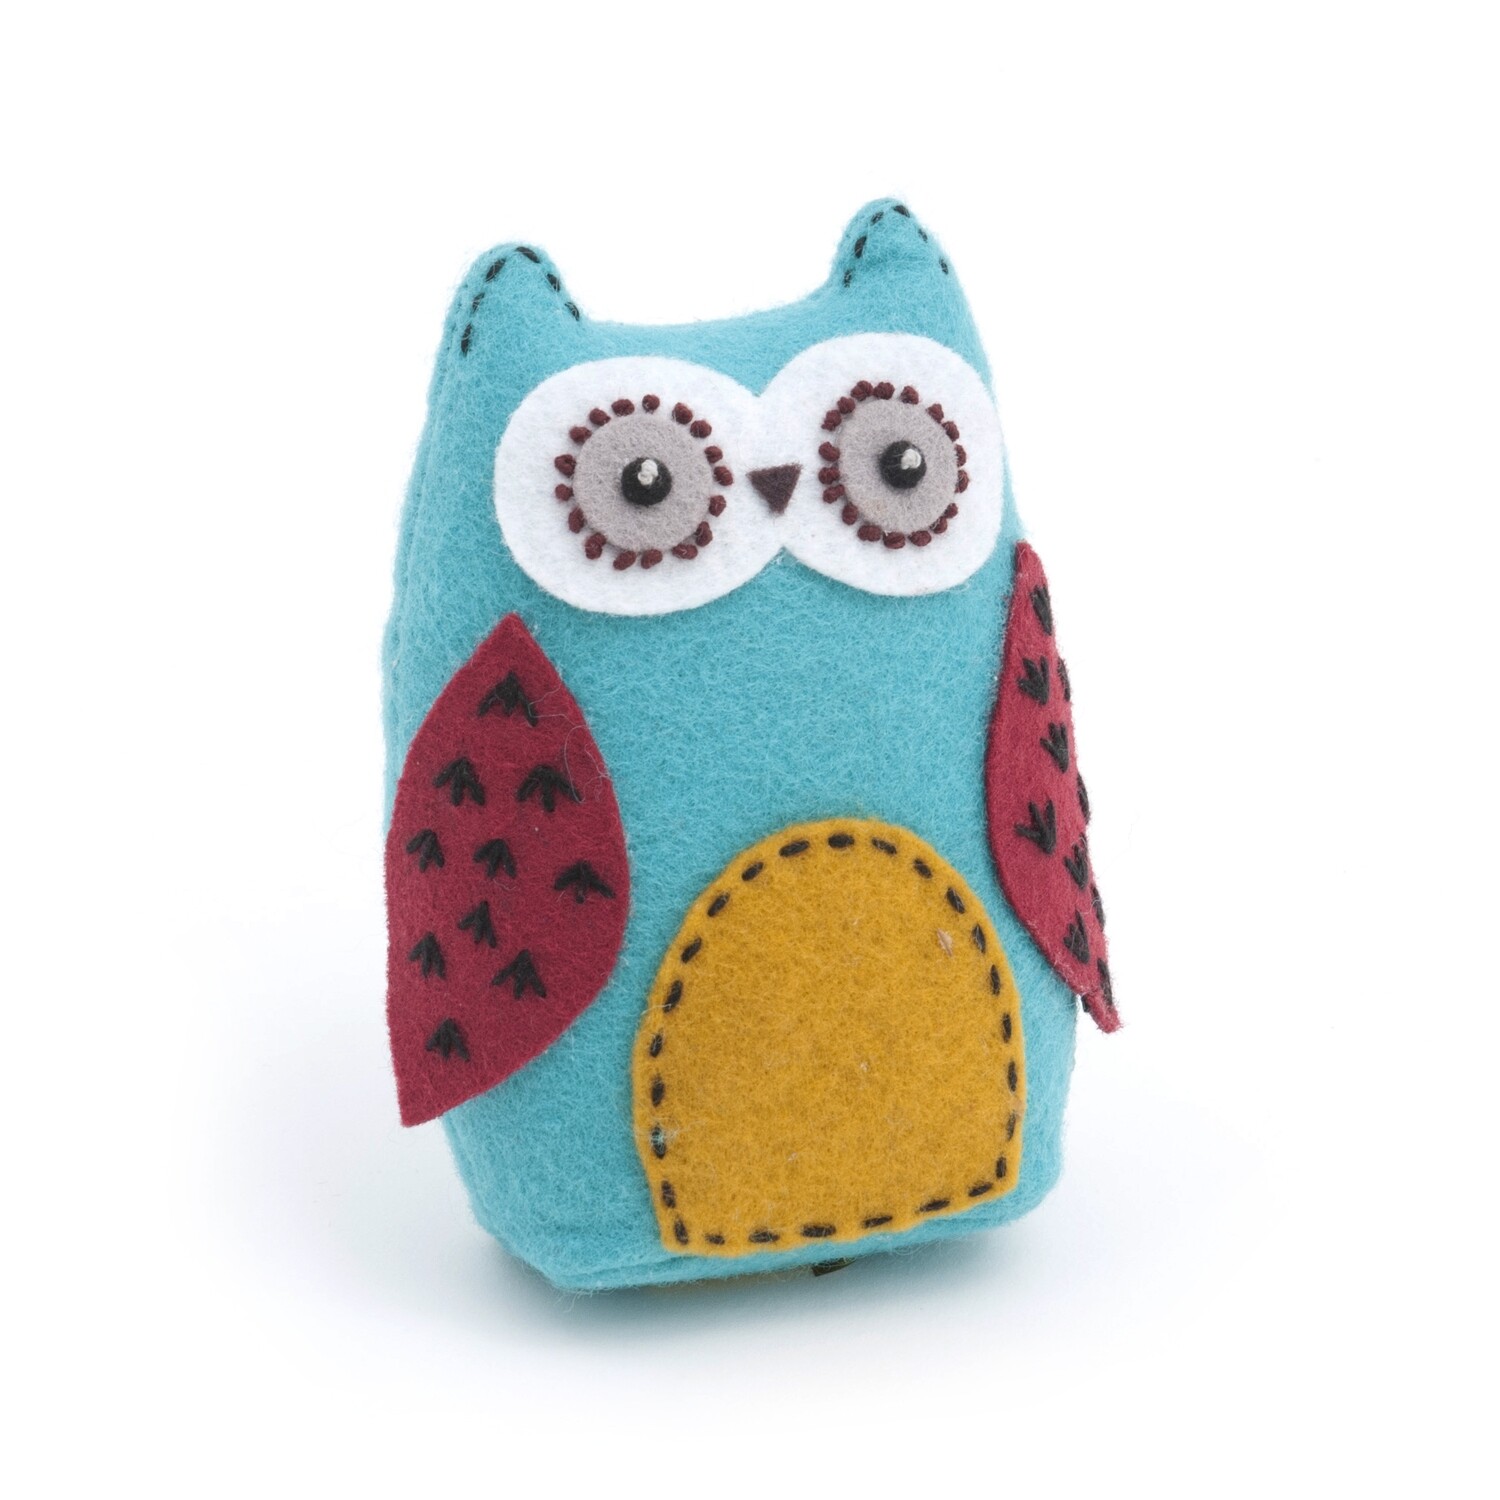 Owl Pincushion - Hoot